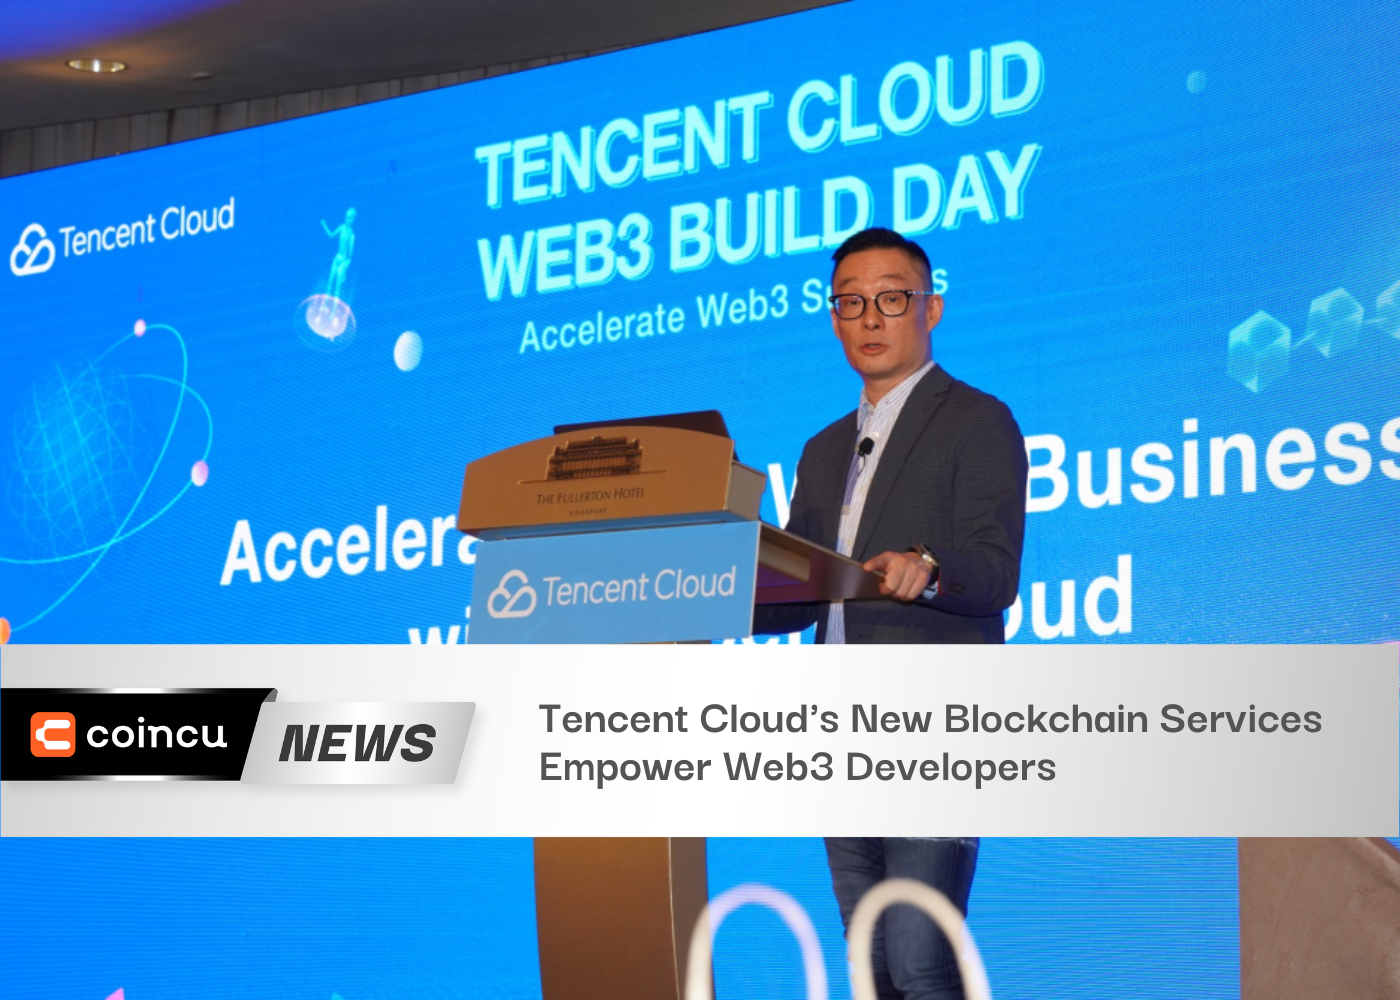 Tencent Cloud's New Blockchain Services Empower Web3 Developers